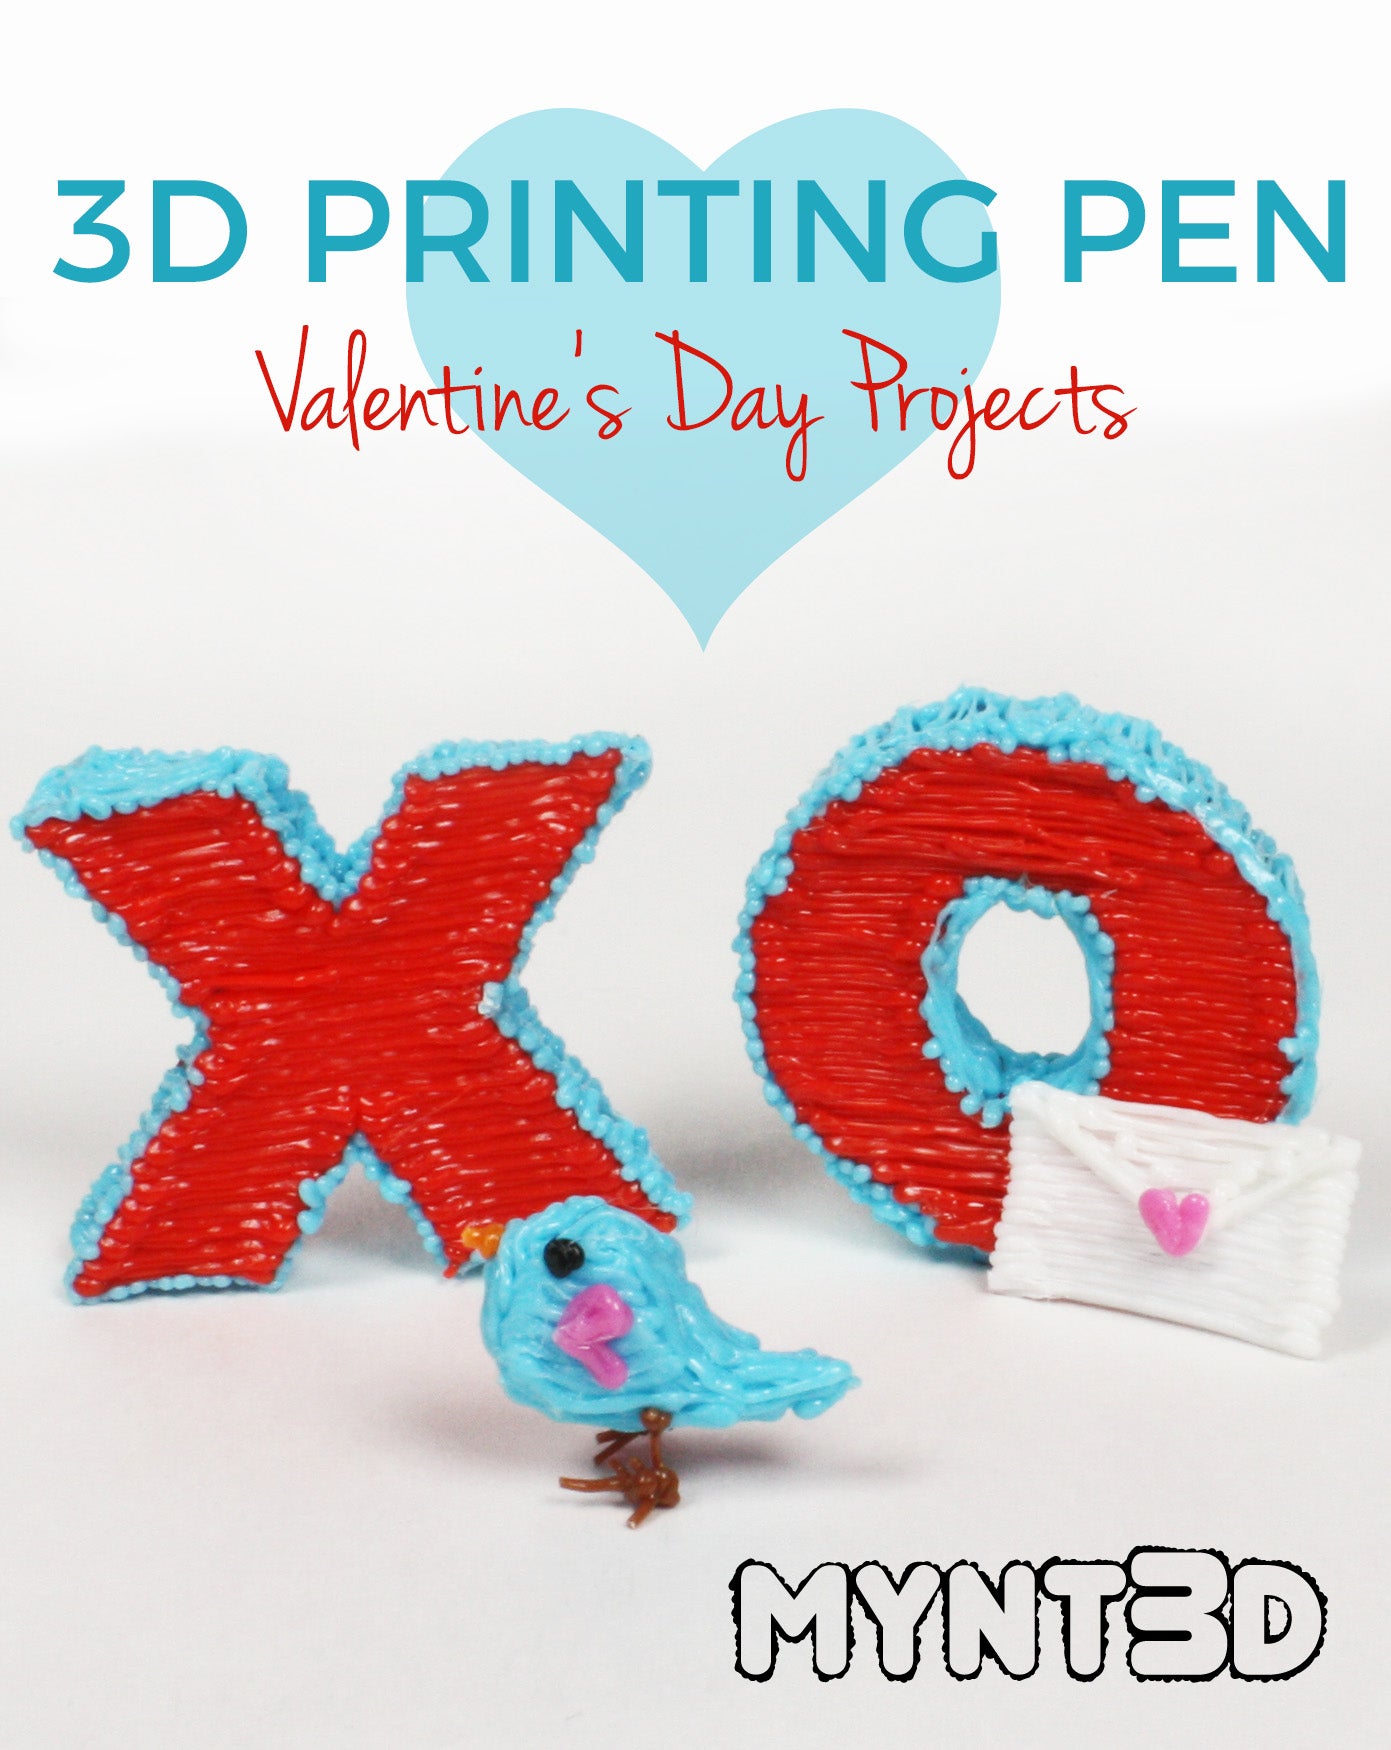 3Doodler Start 3D Pen / Children's 3D Pen / Kid's Crafts